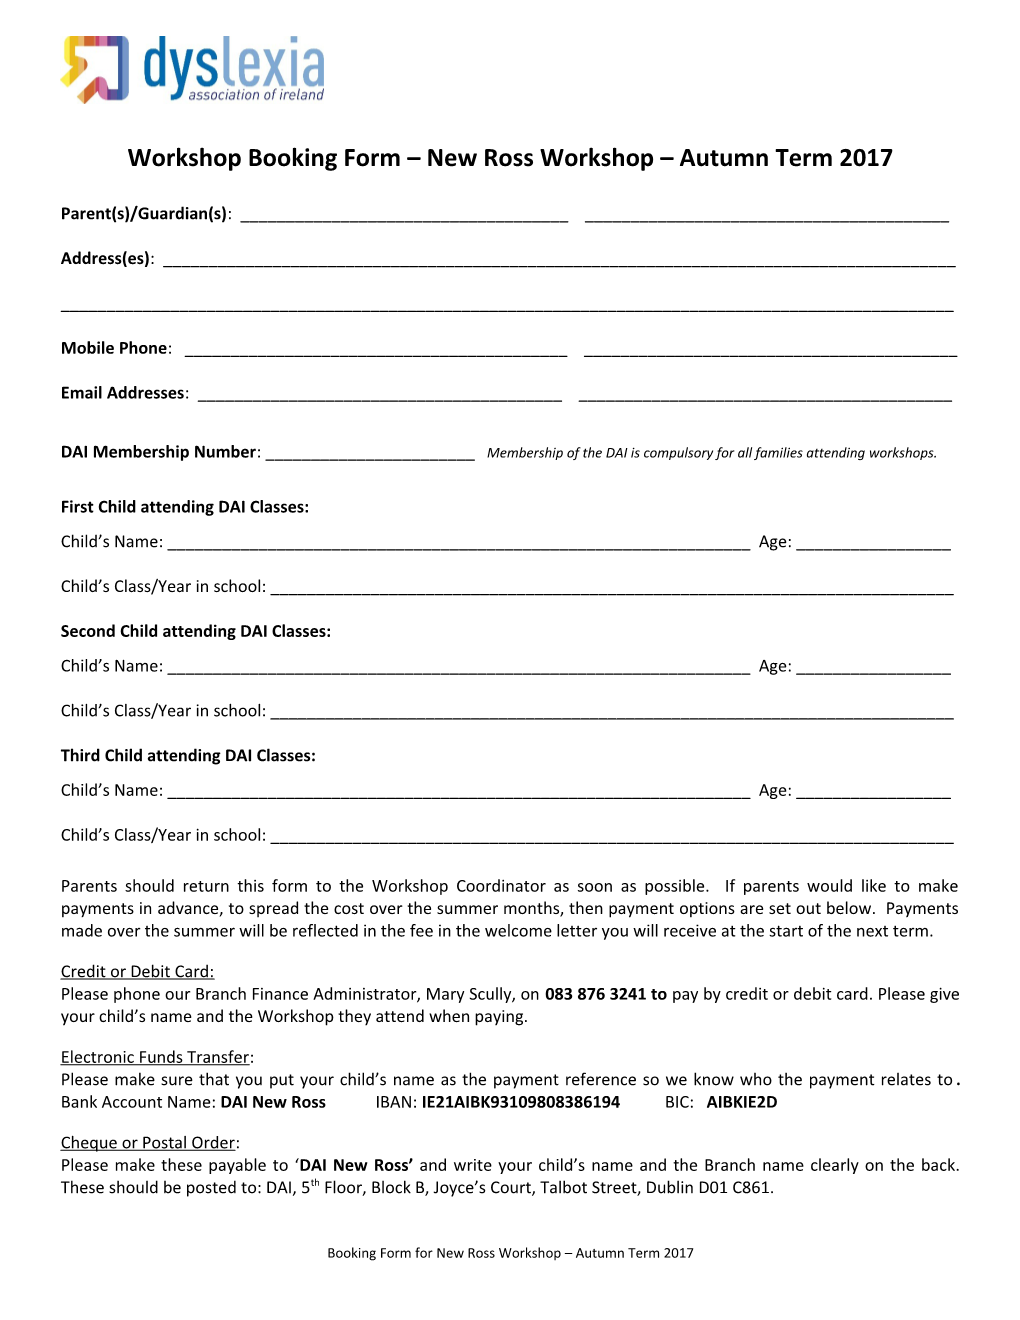 Workshop Booking Form New Ross Workshop Autumn Term 2017